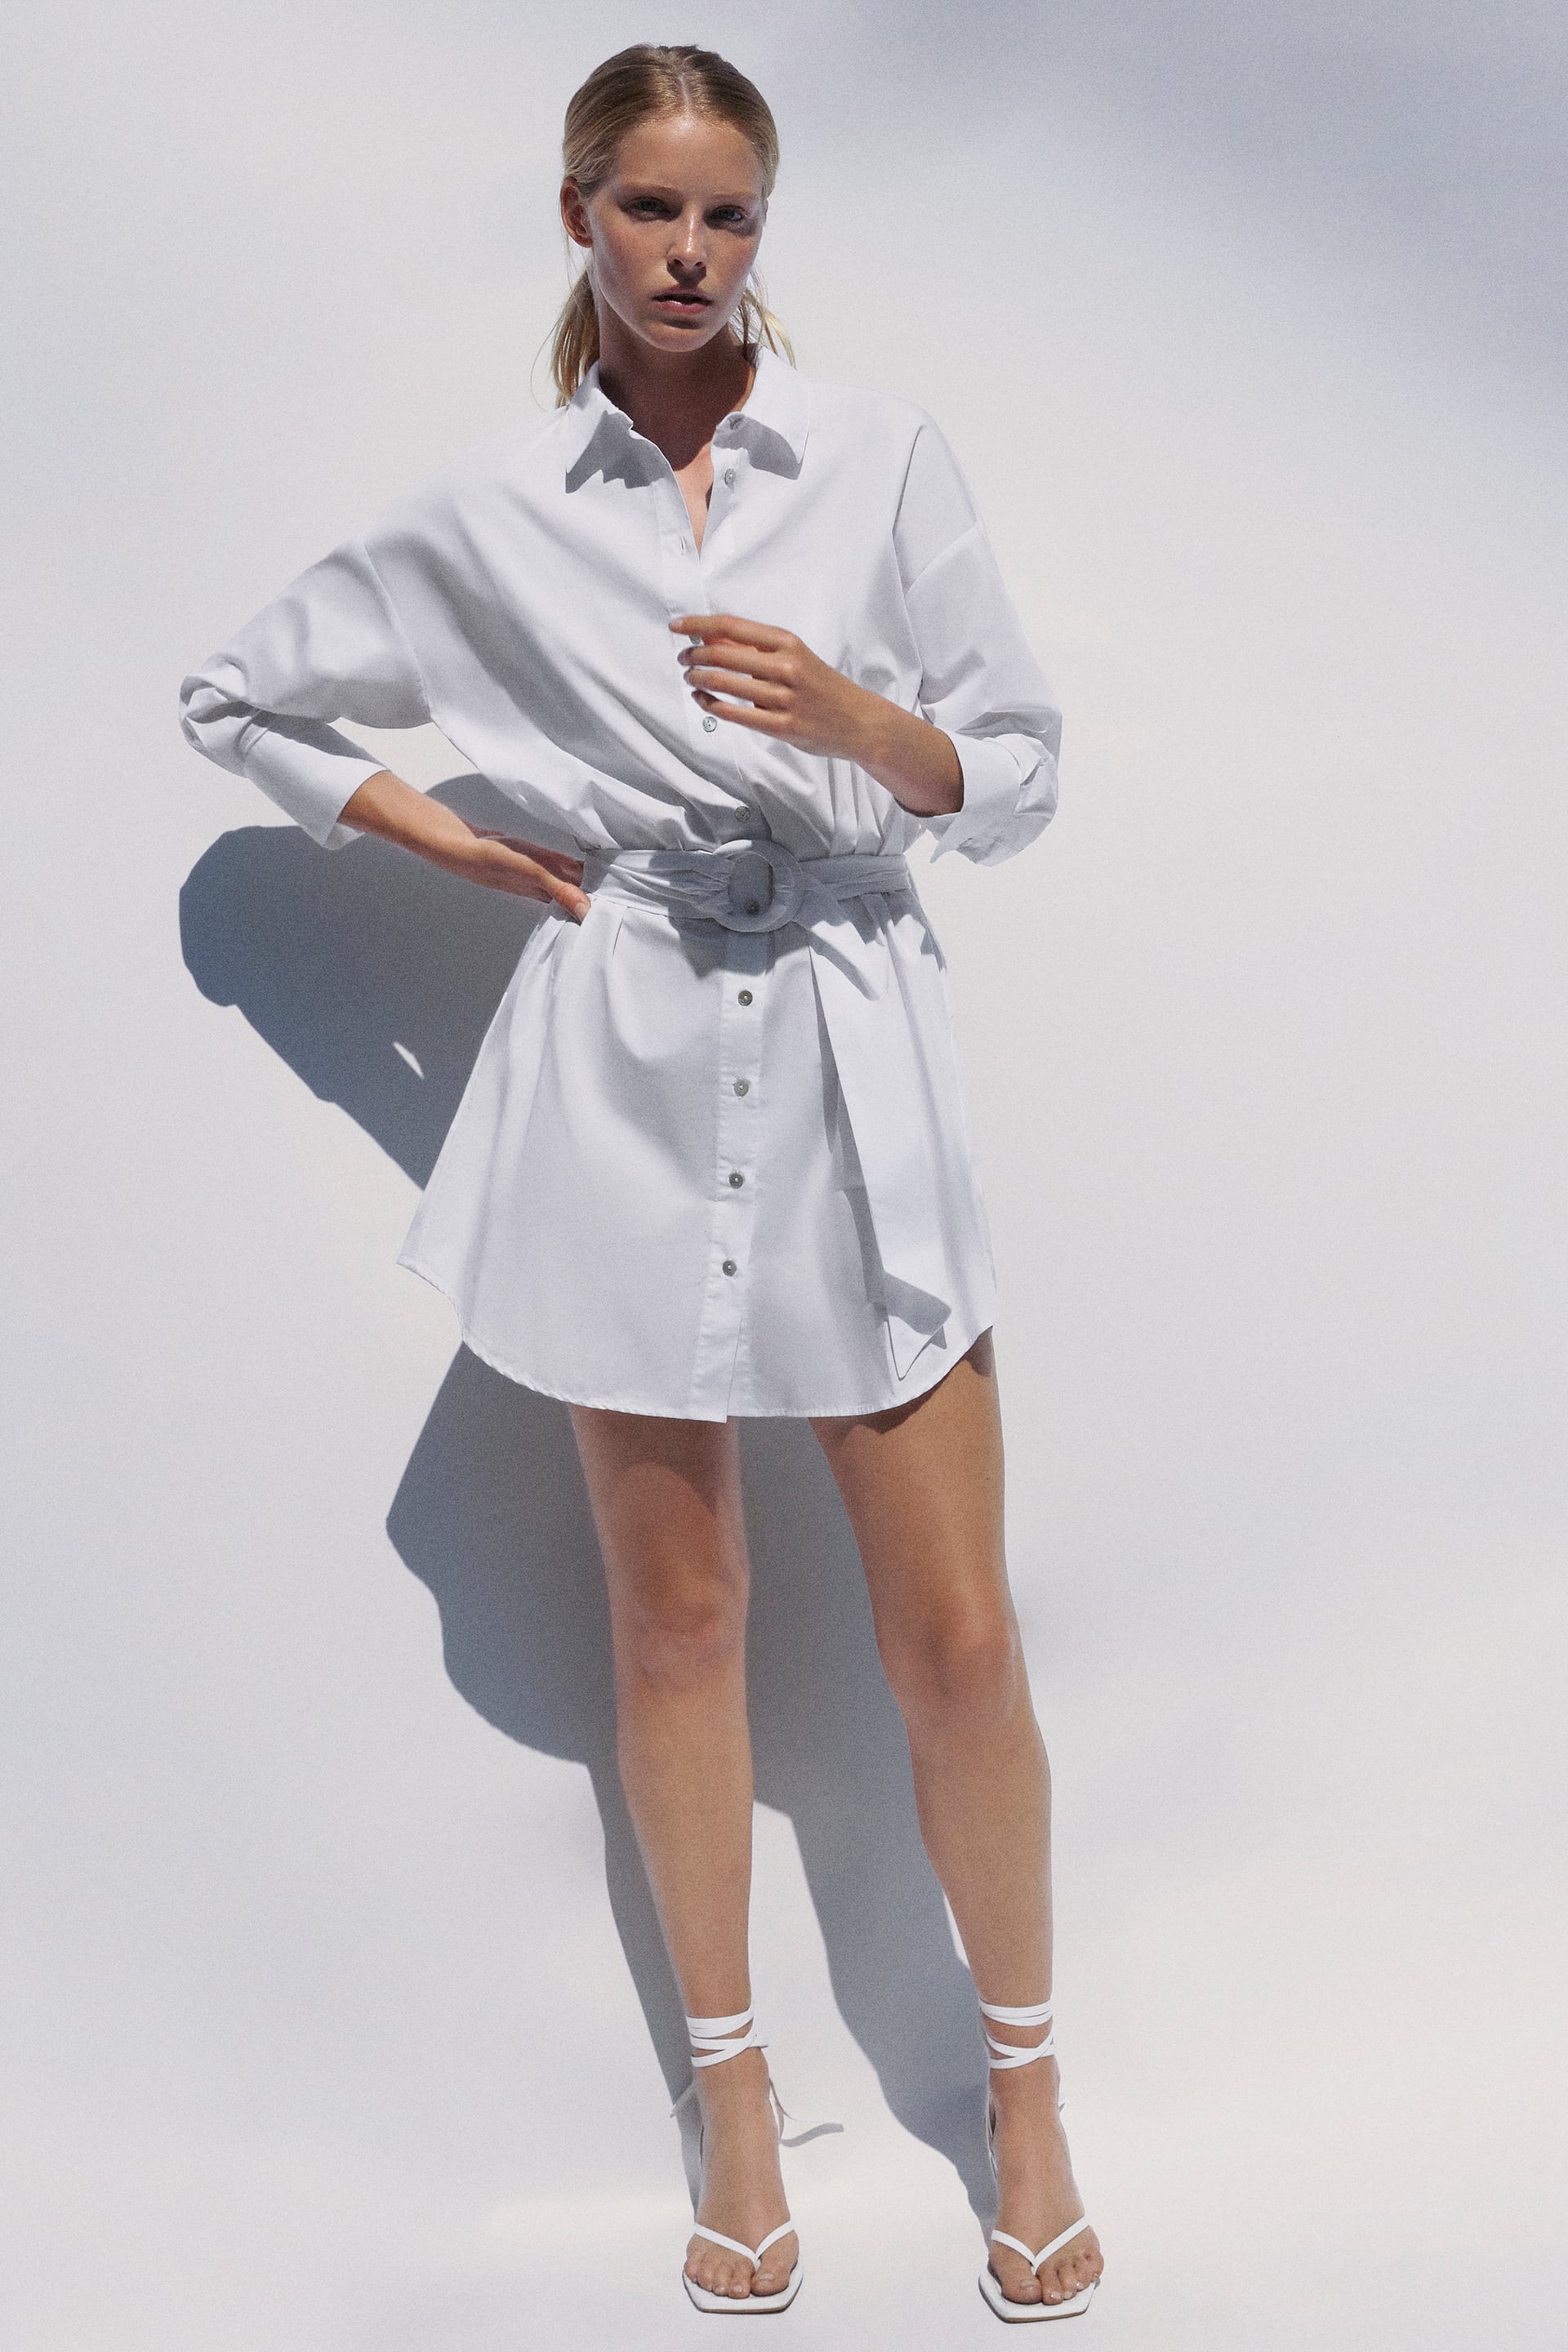 Featured image of post Zara White Satin Shirt Dress : White button down shirt button downs button up shirts white shirts women elegant outfit danielle top is a women&#039;s white button down shirt, minimalist and fabulous.